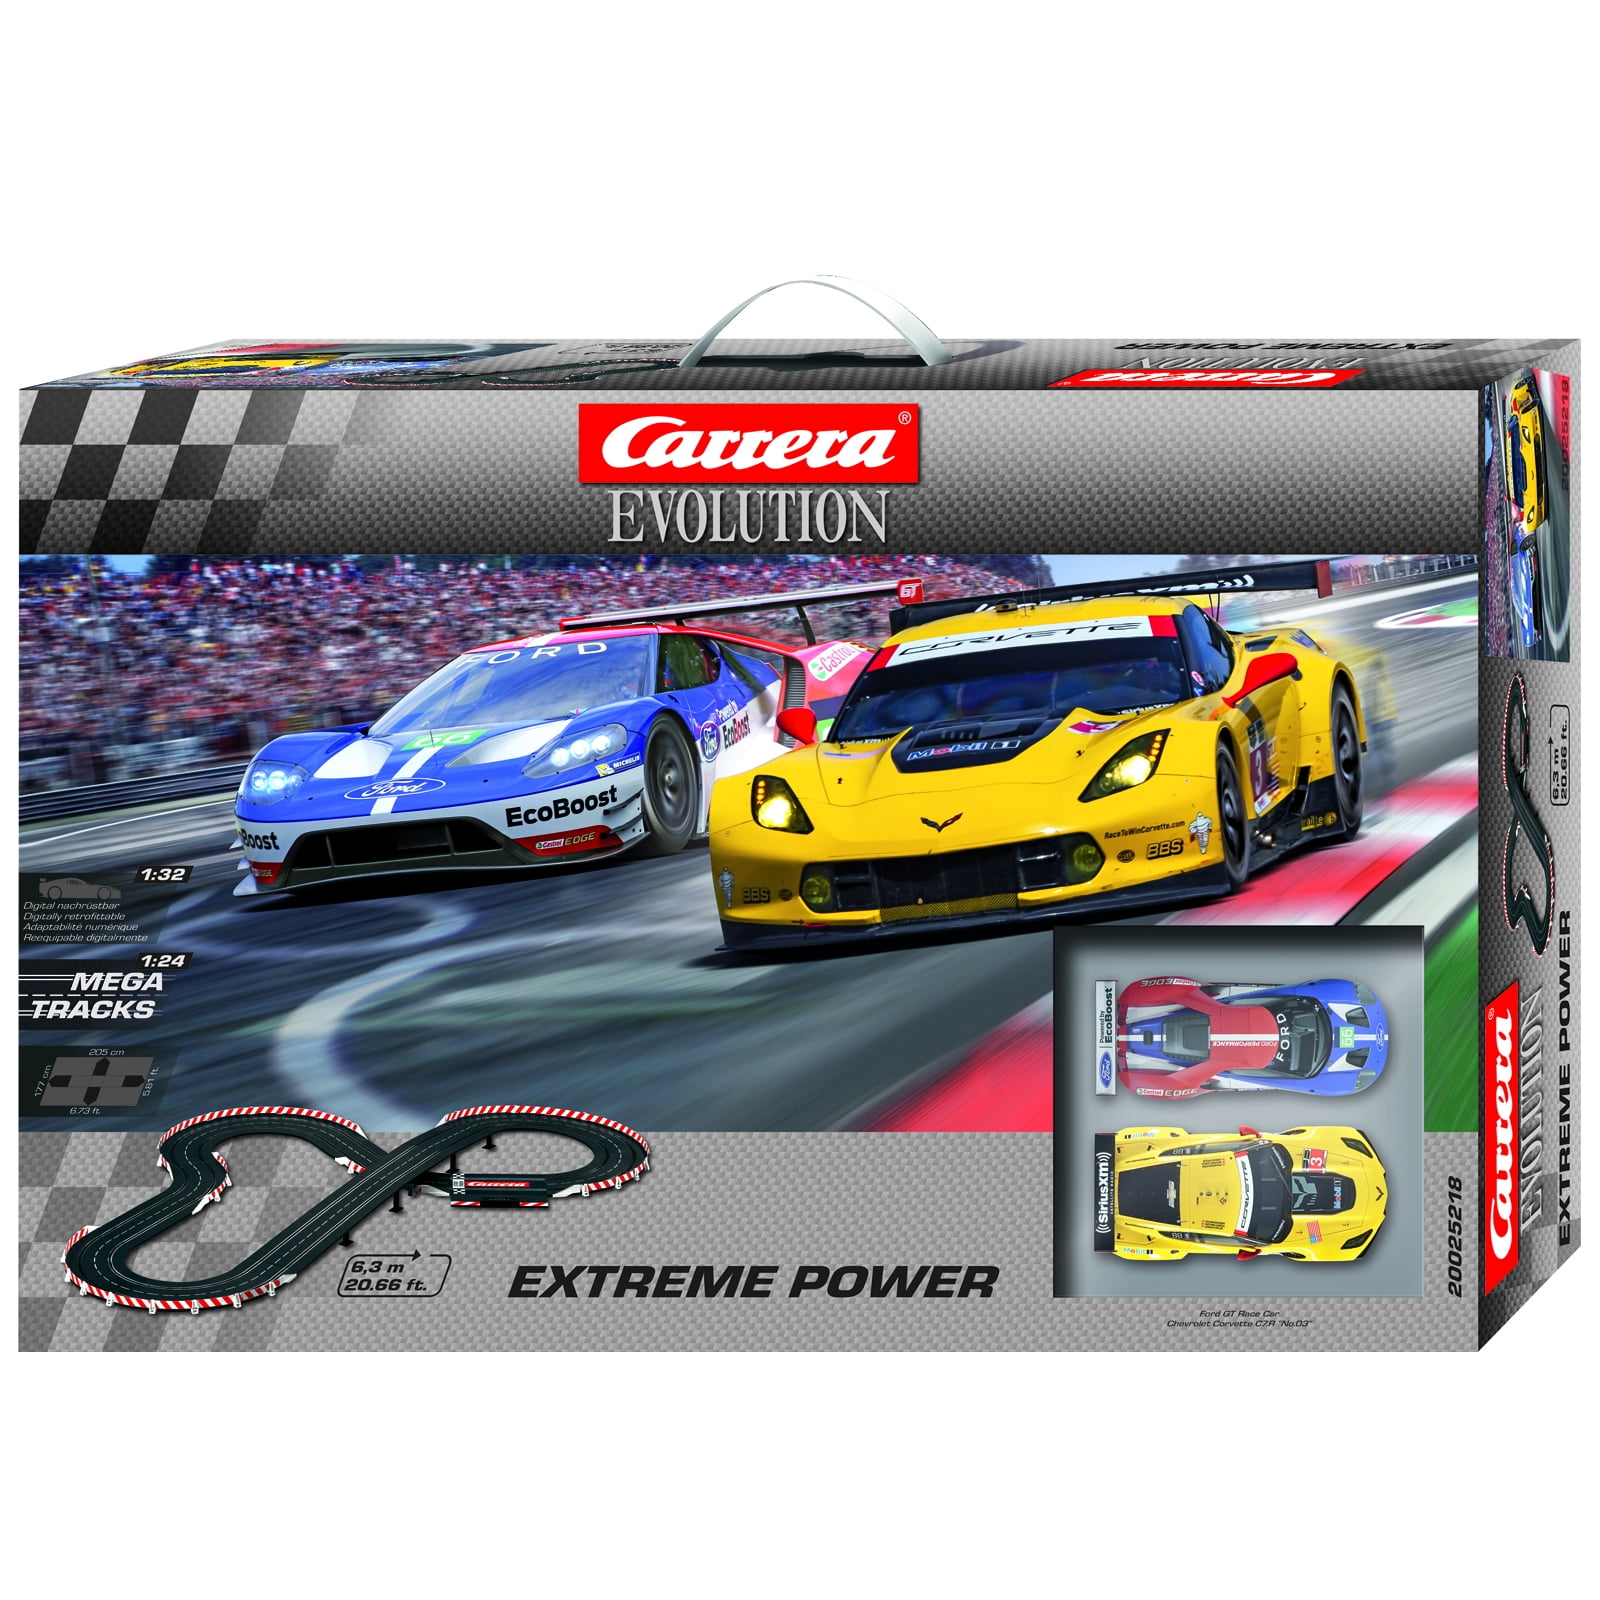 Carrera Evolution Extreme Power 1:32 Scale Slot Car Race Set 